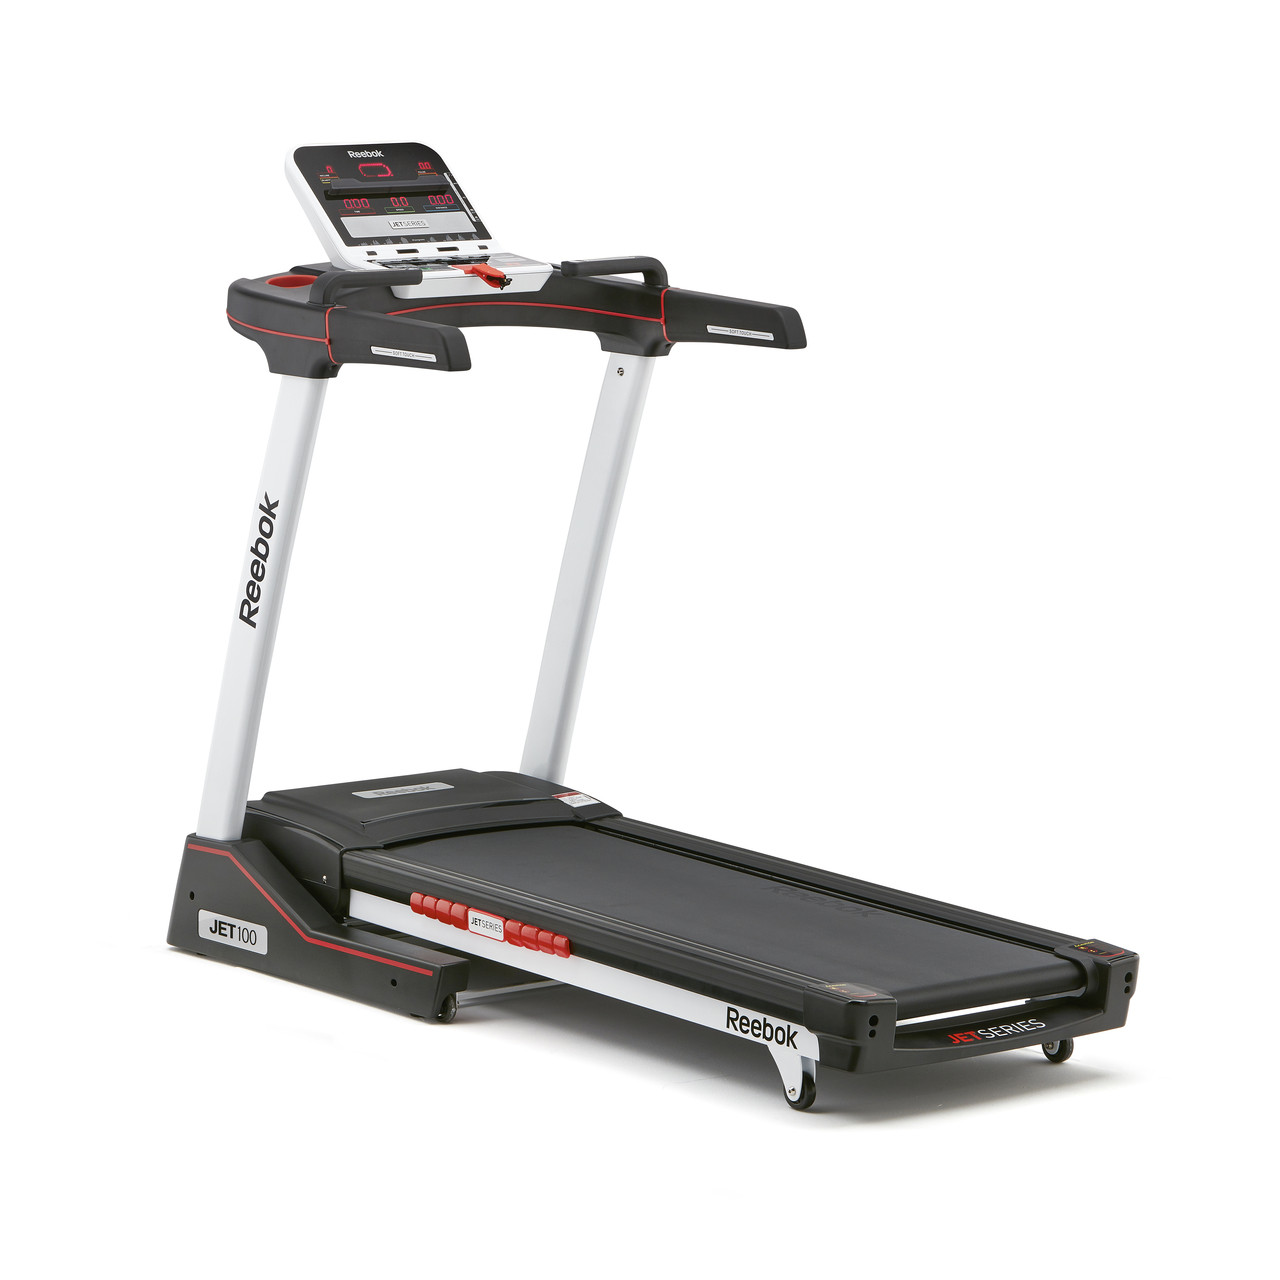 Reebok Jet 100 Treadmill - WF Athletic Supply